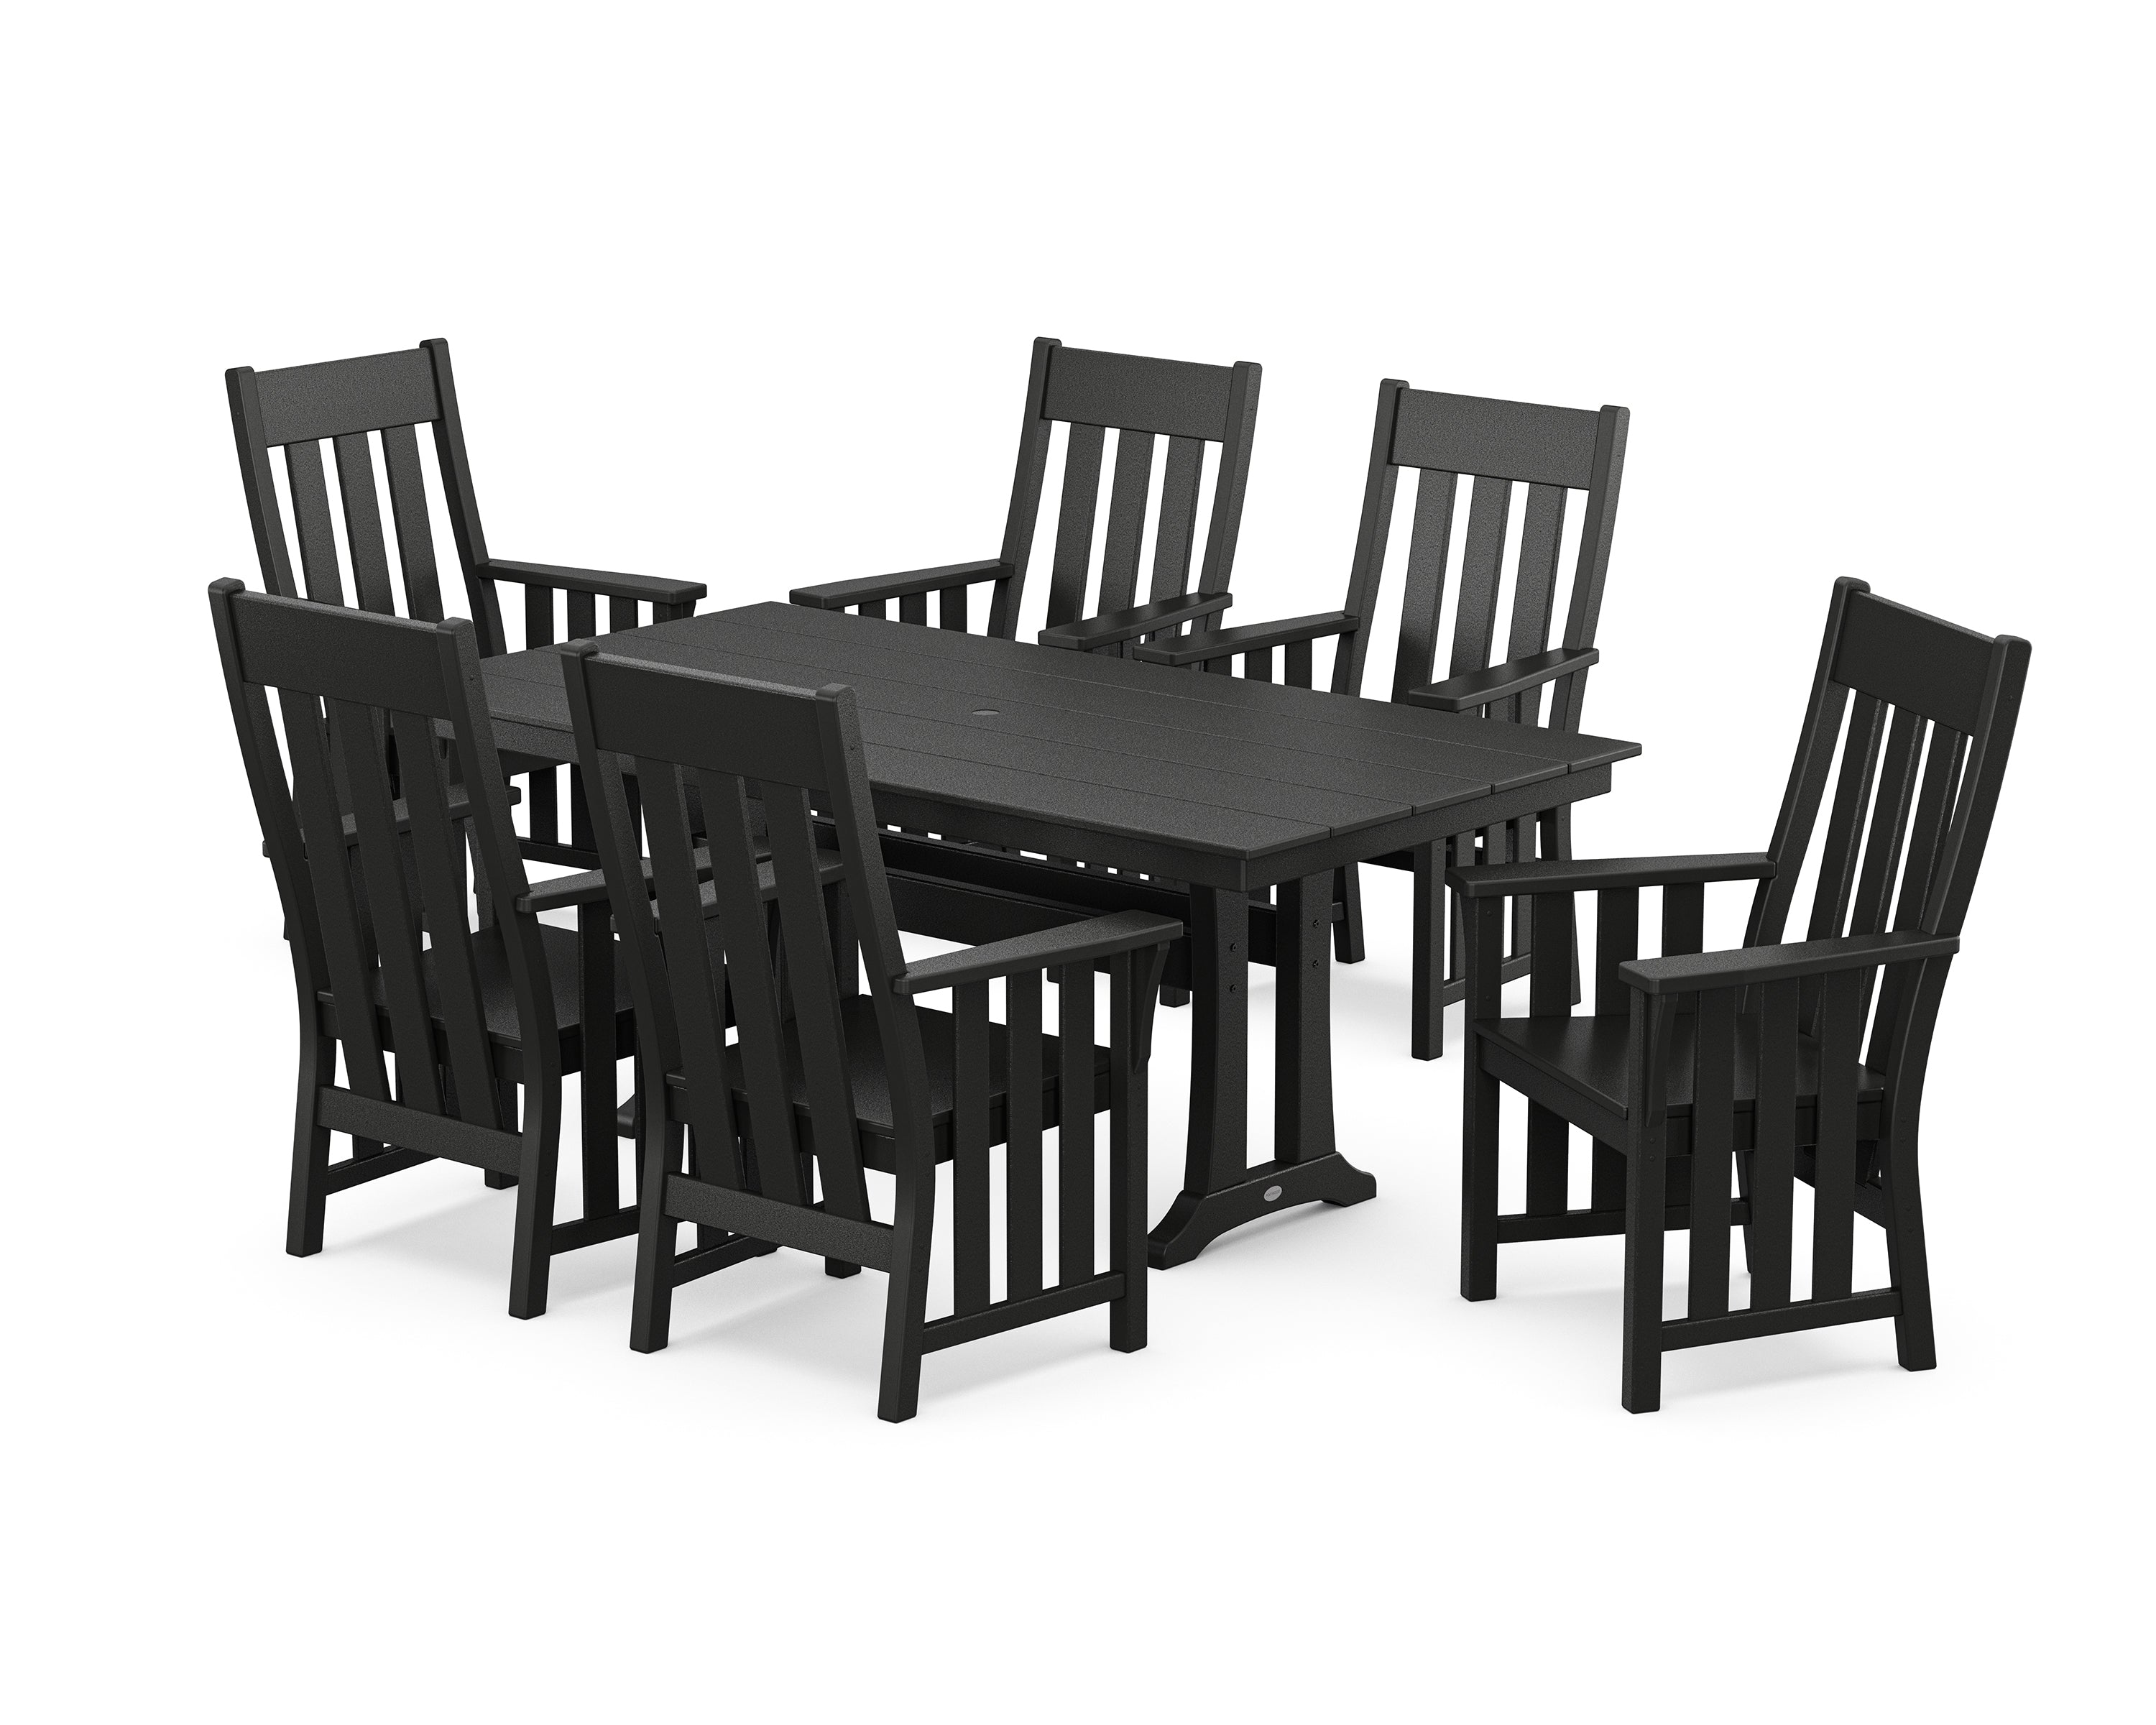 Martha Stewart by POLYWOOD® Acadia Arm Chair 7-Piece Farmhouse Dining Set with Trestle Legs in Black